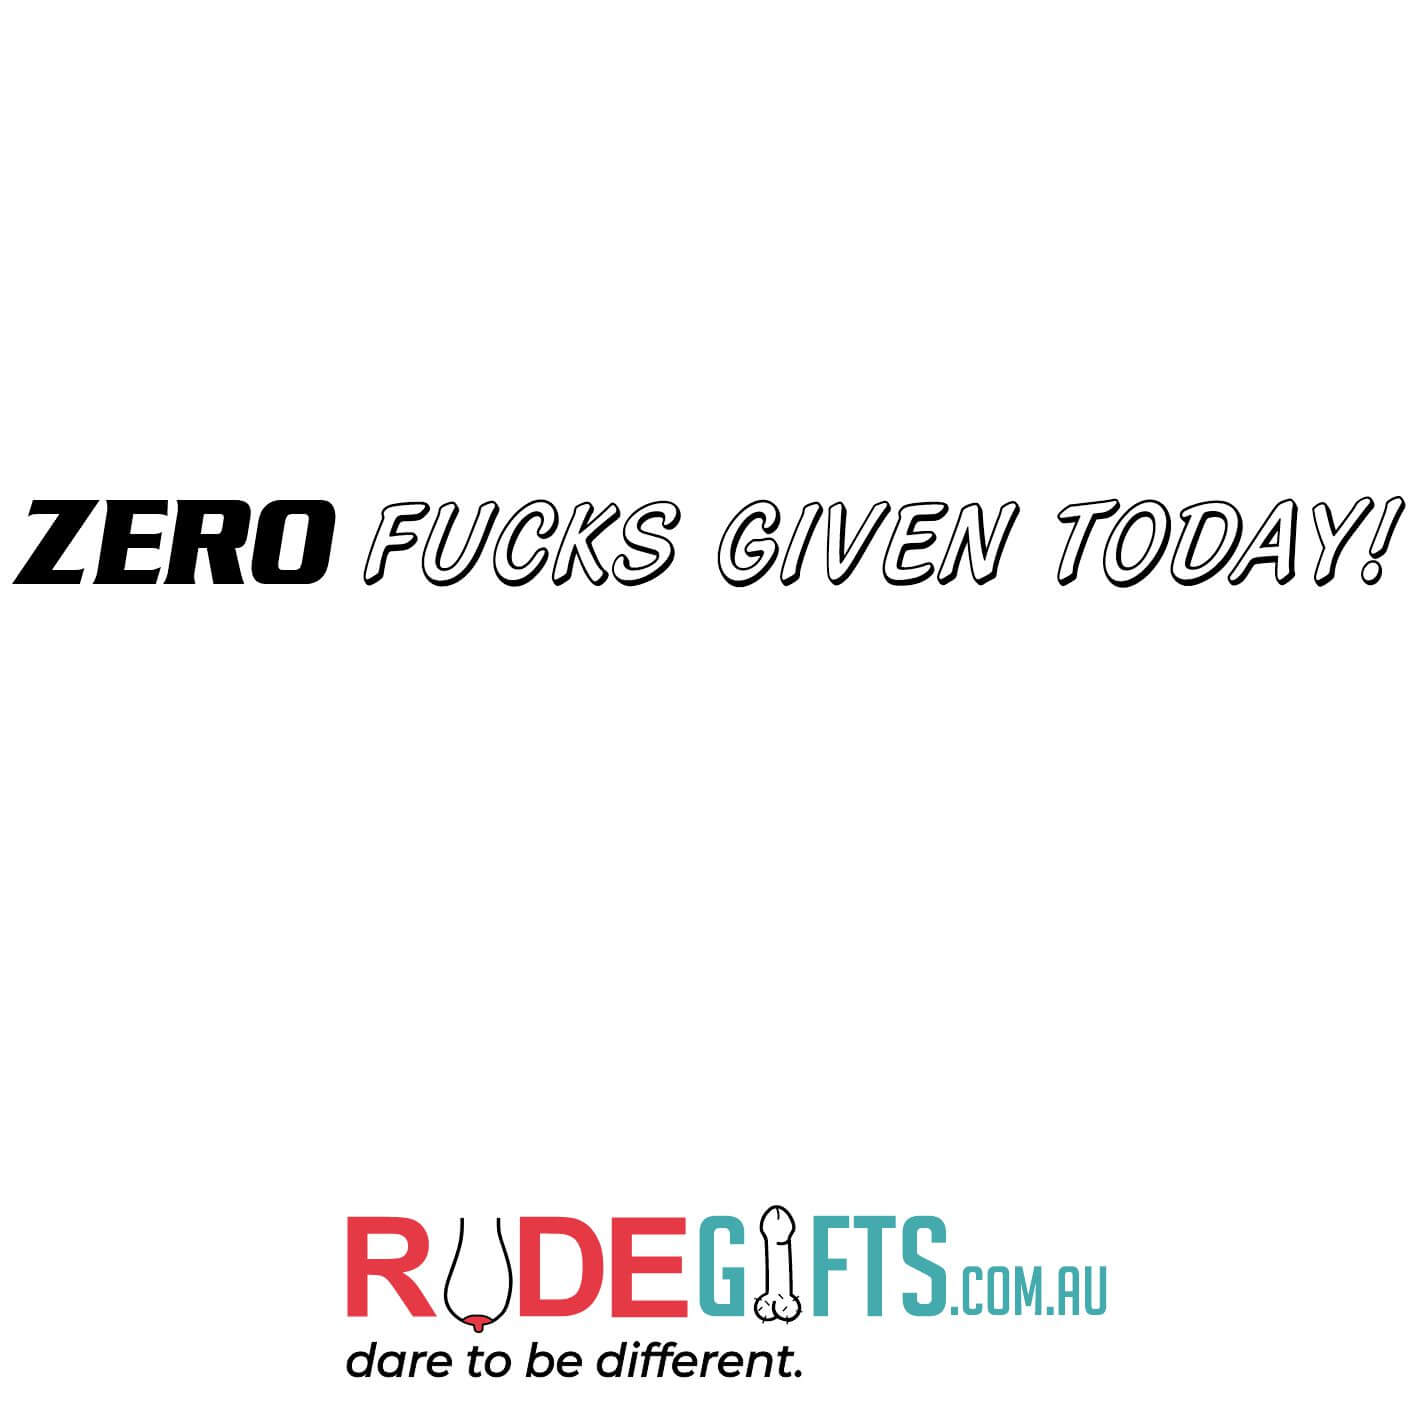 Zero fucks given today! - 0